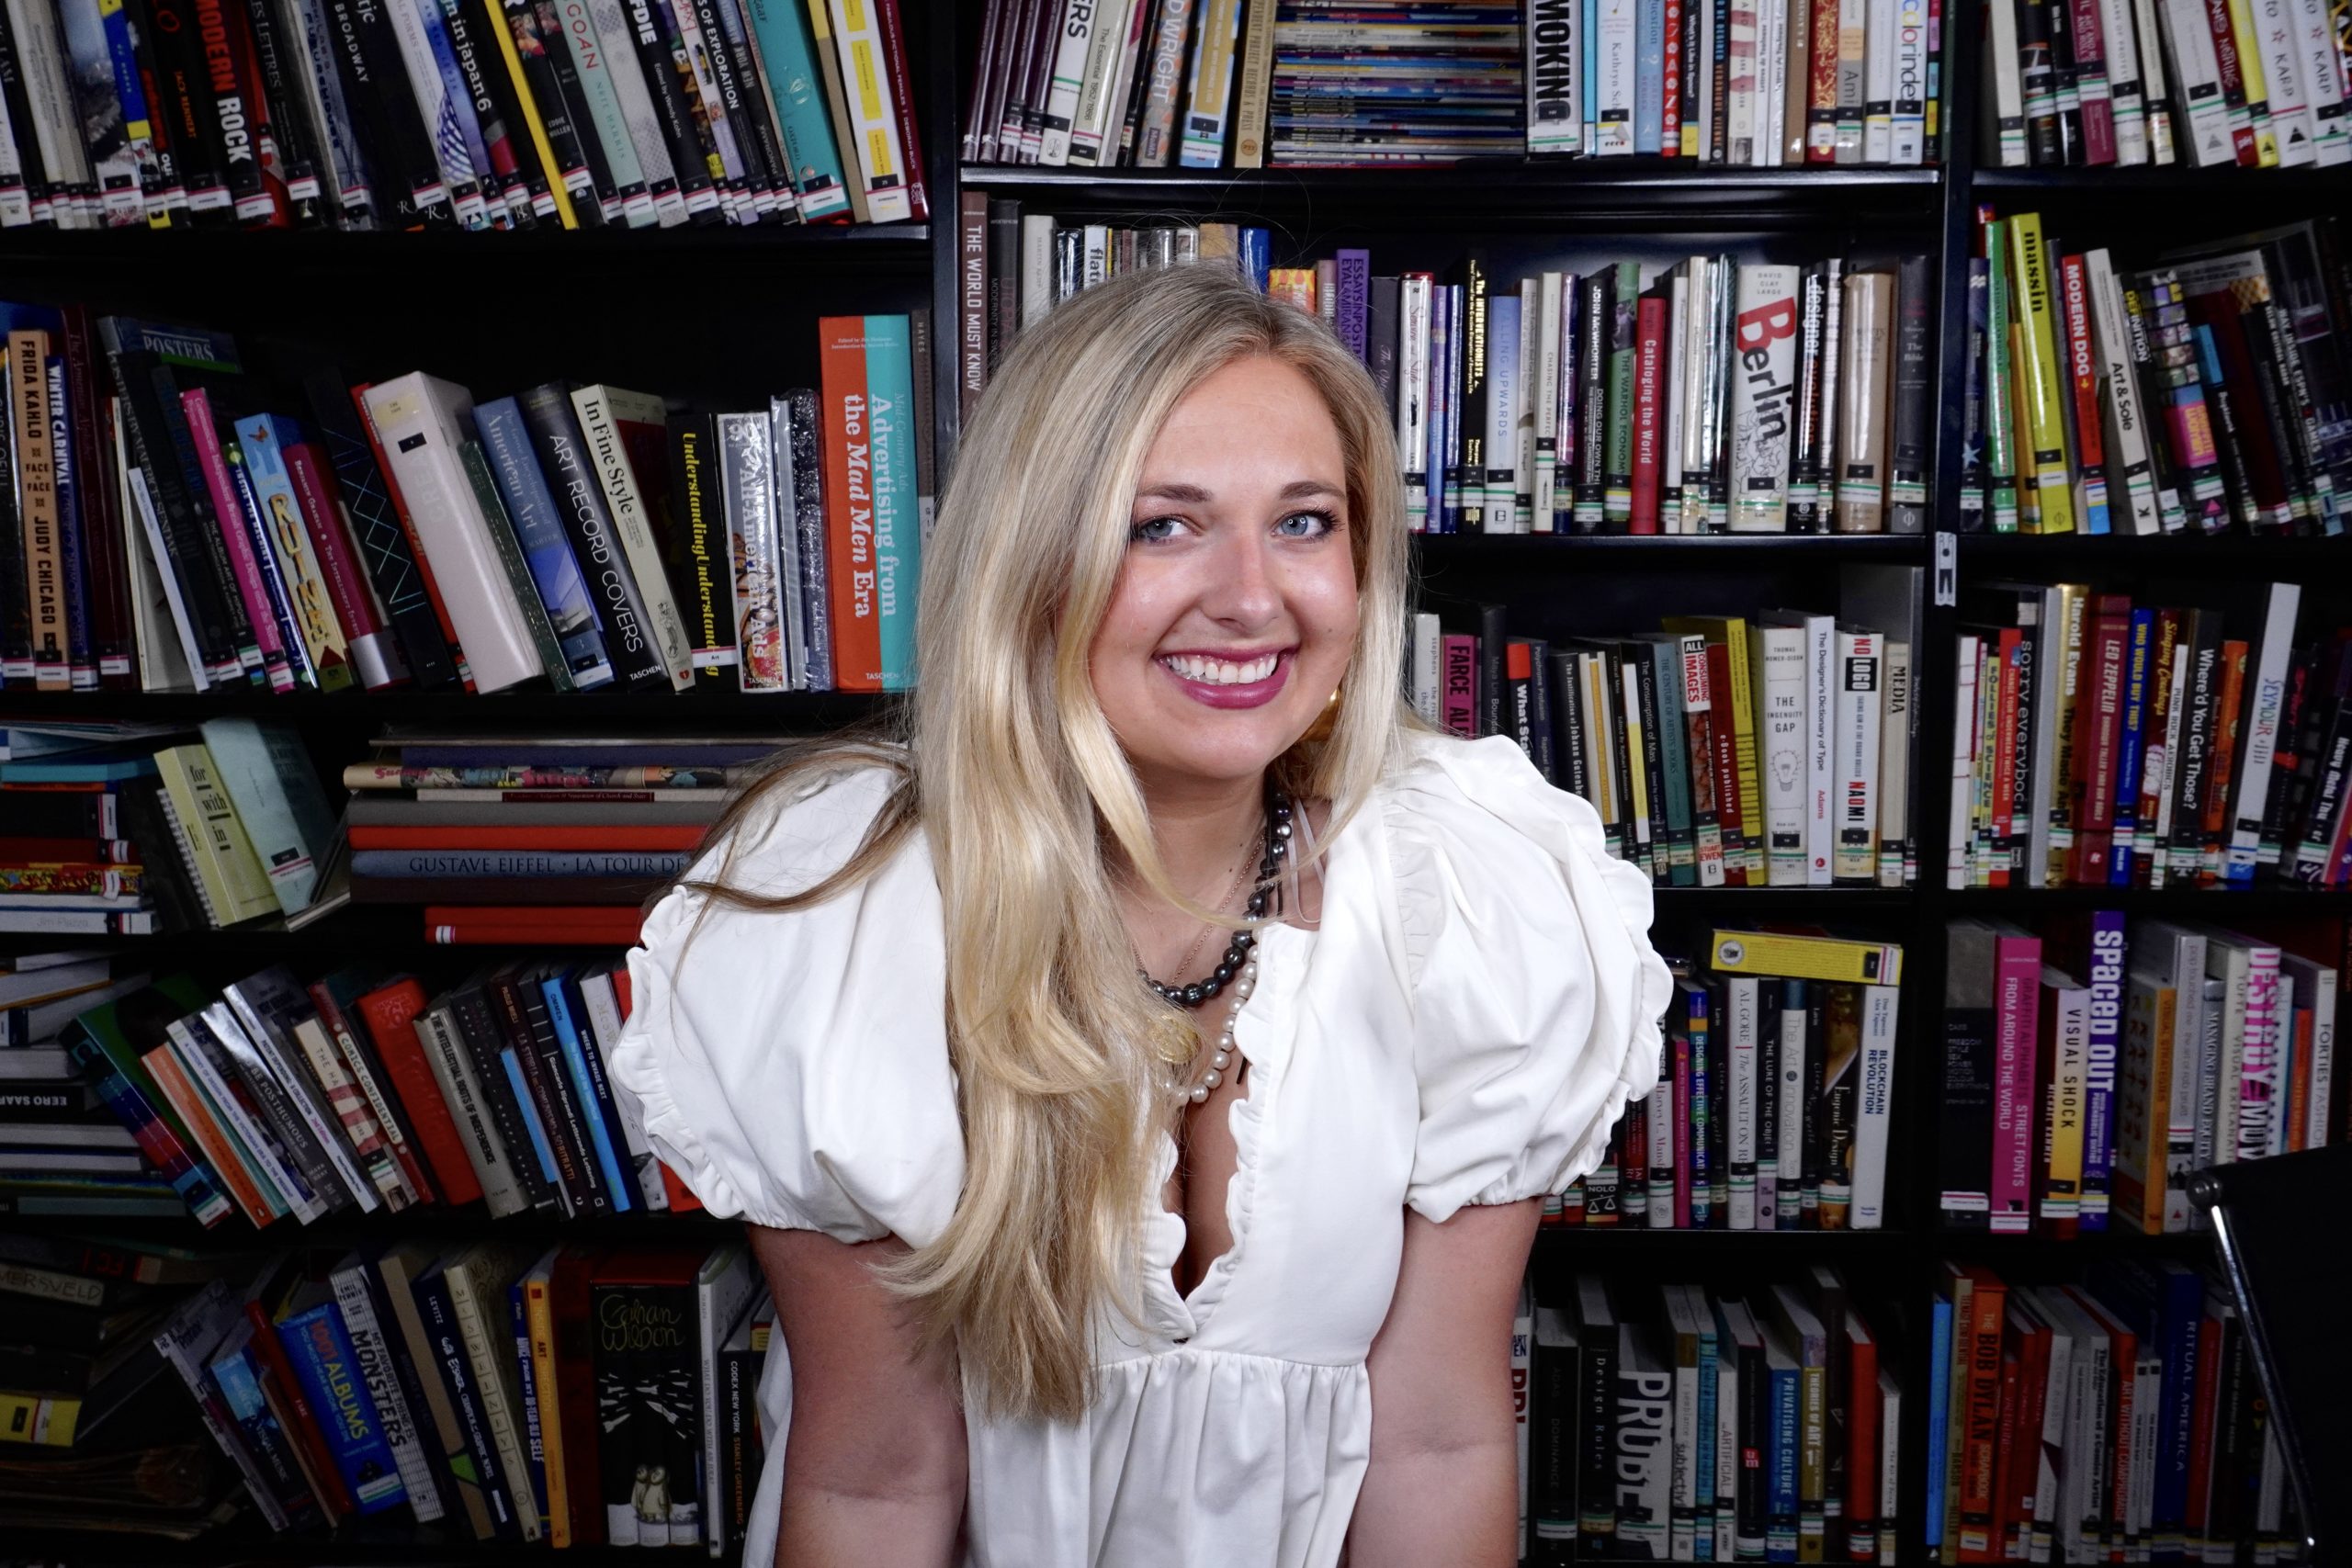 blonde woman posing in front of bookshelf